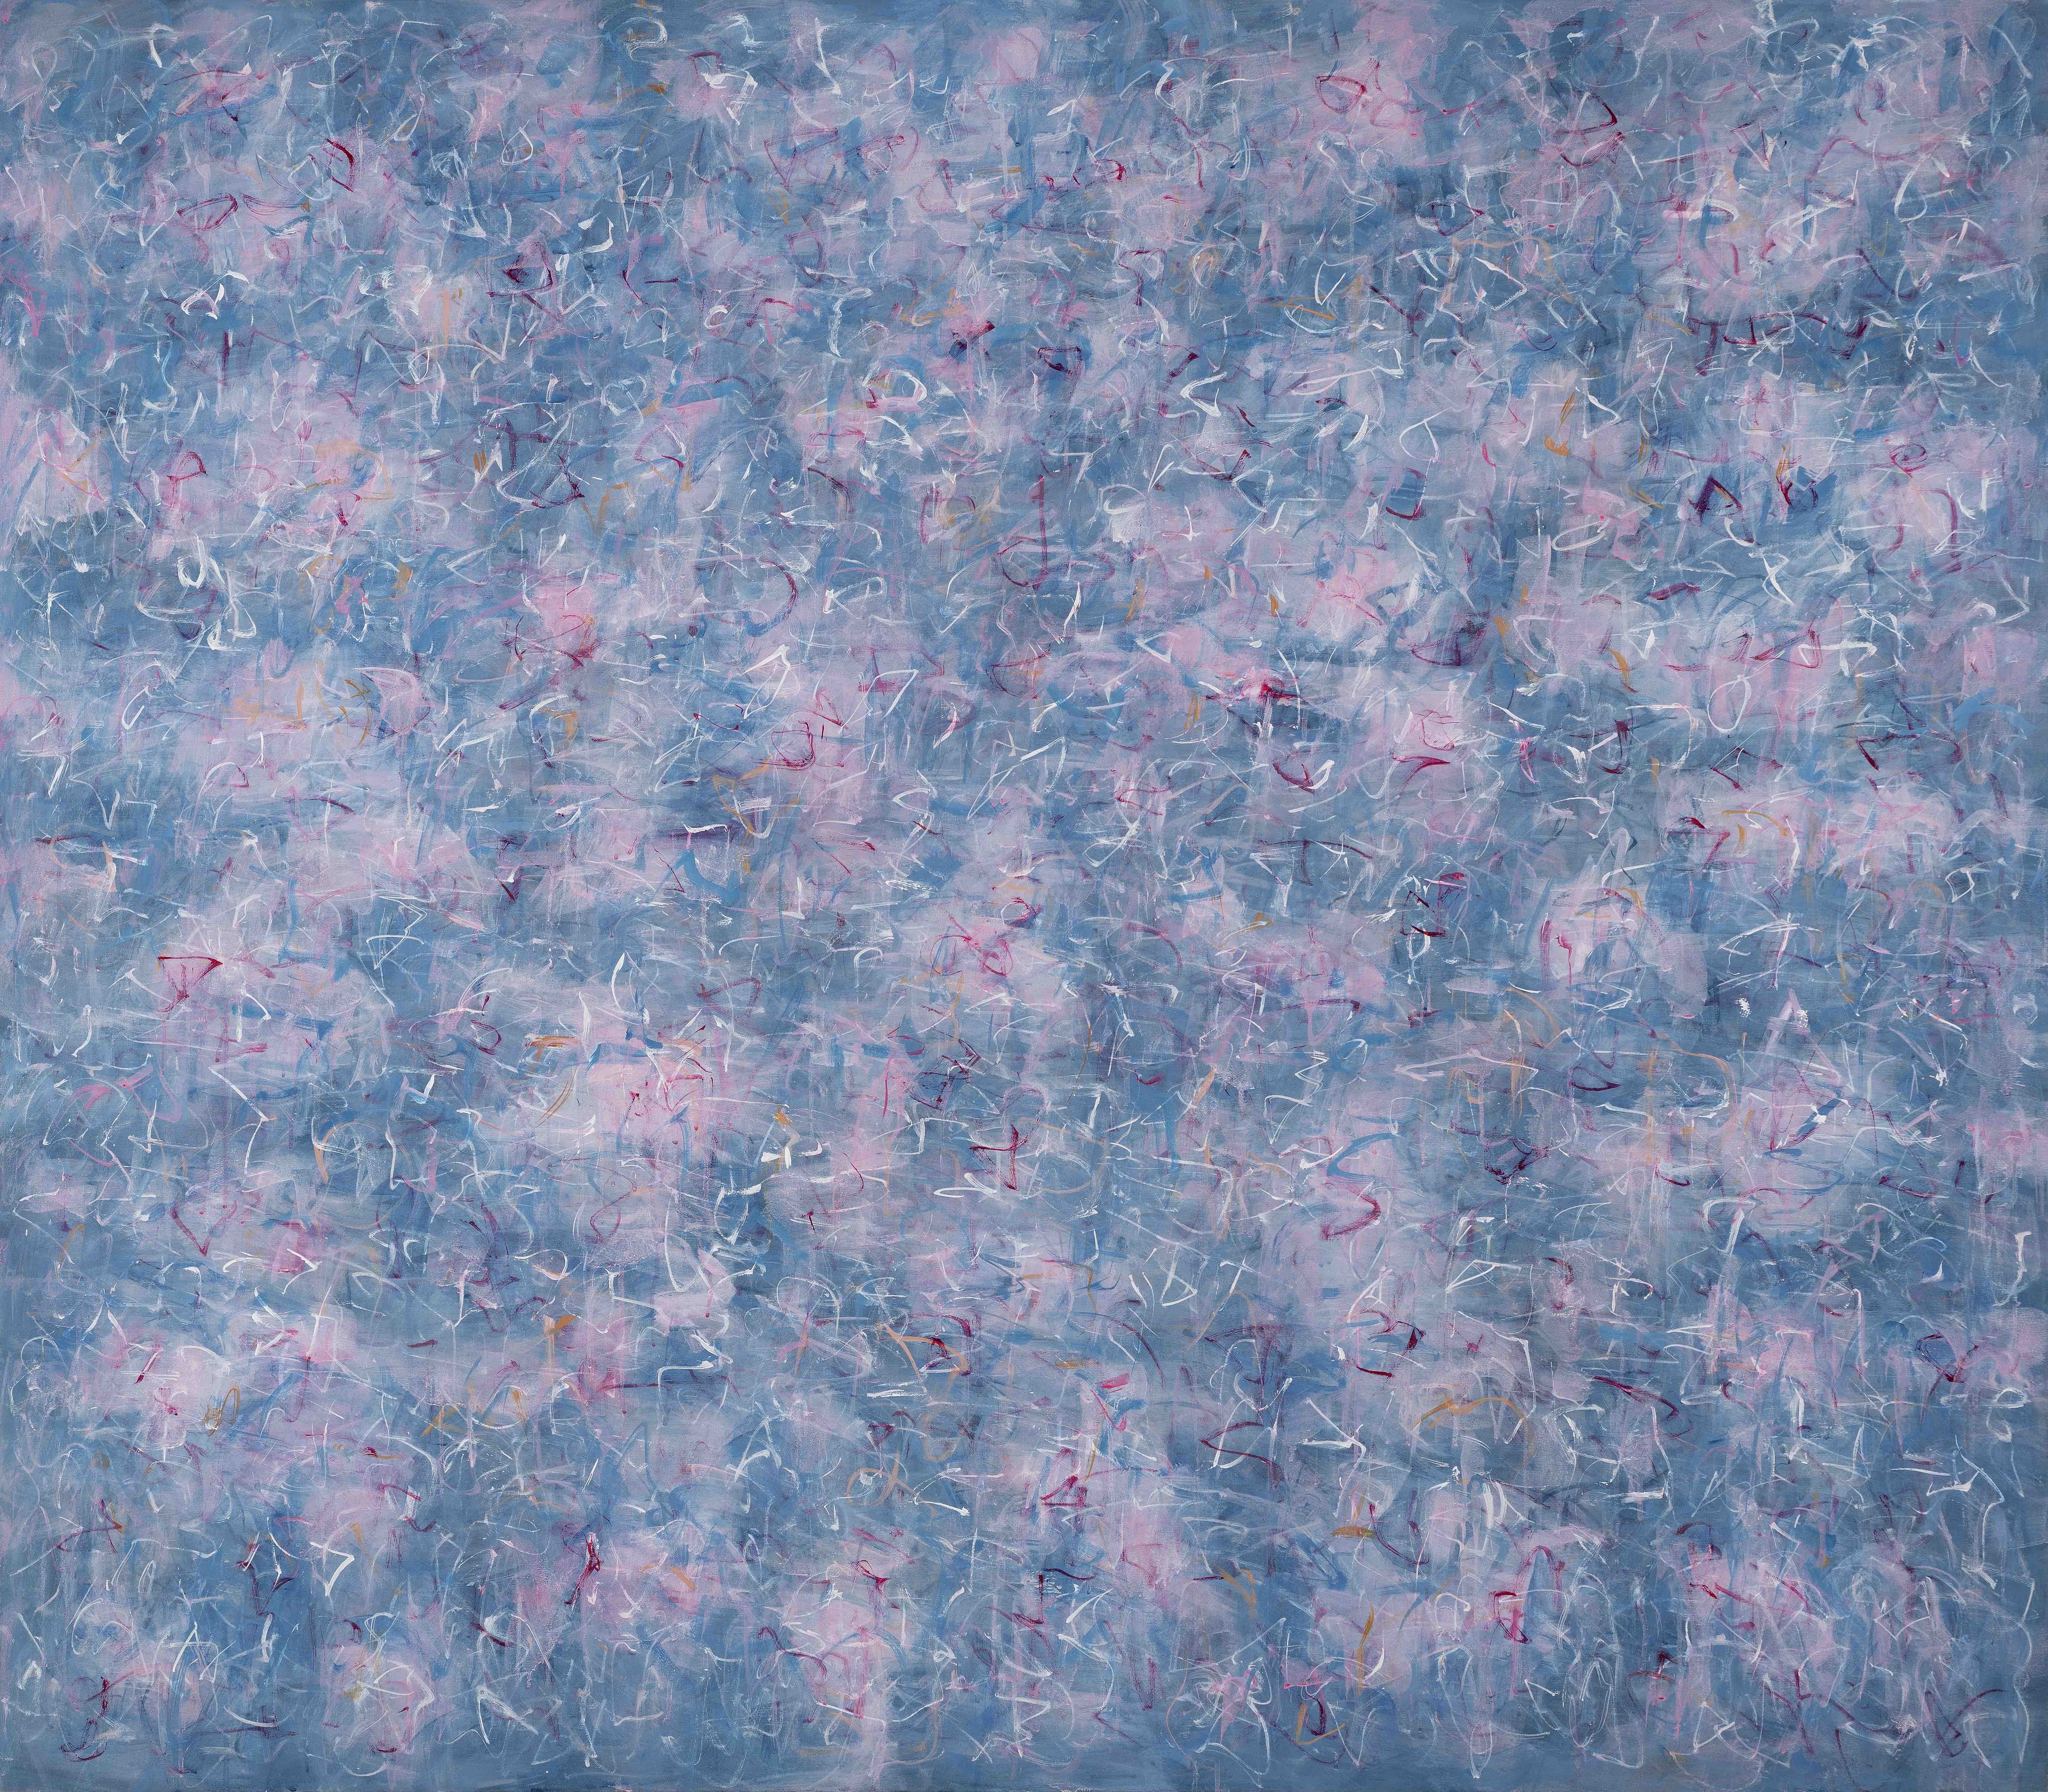 Margaret Garrett's “Rhythm at Dusk,” 2019. Acrylic on linen, 57” x 66”.